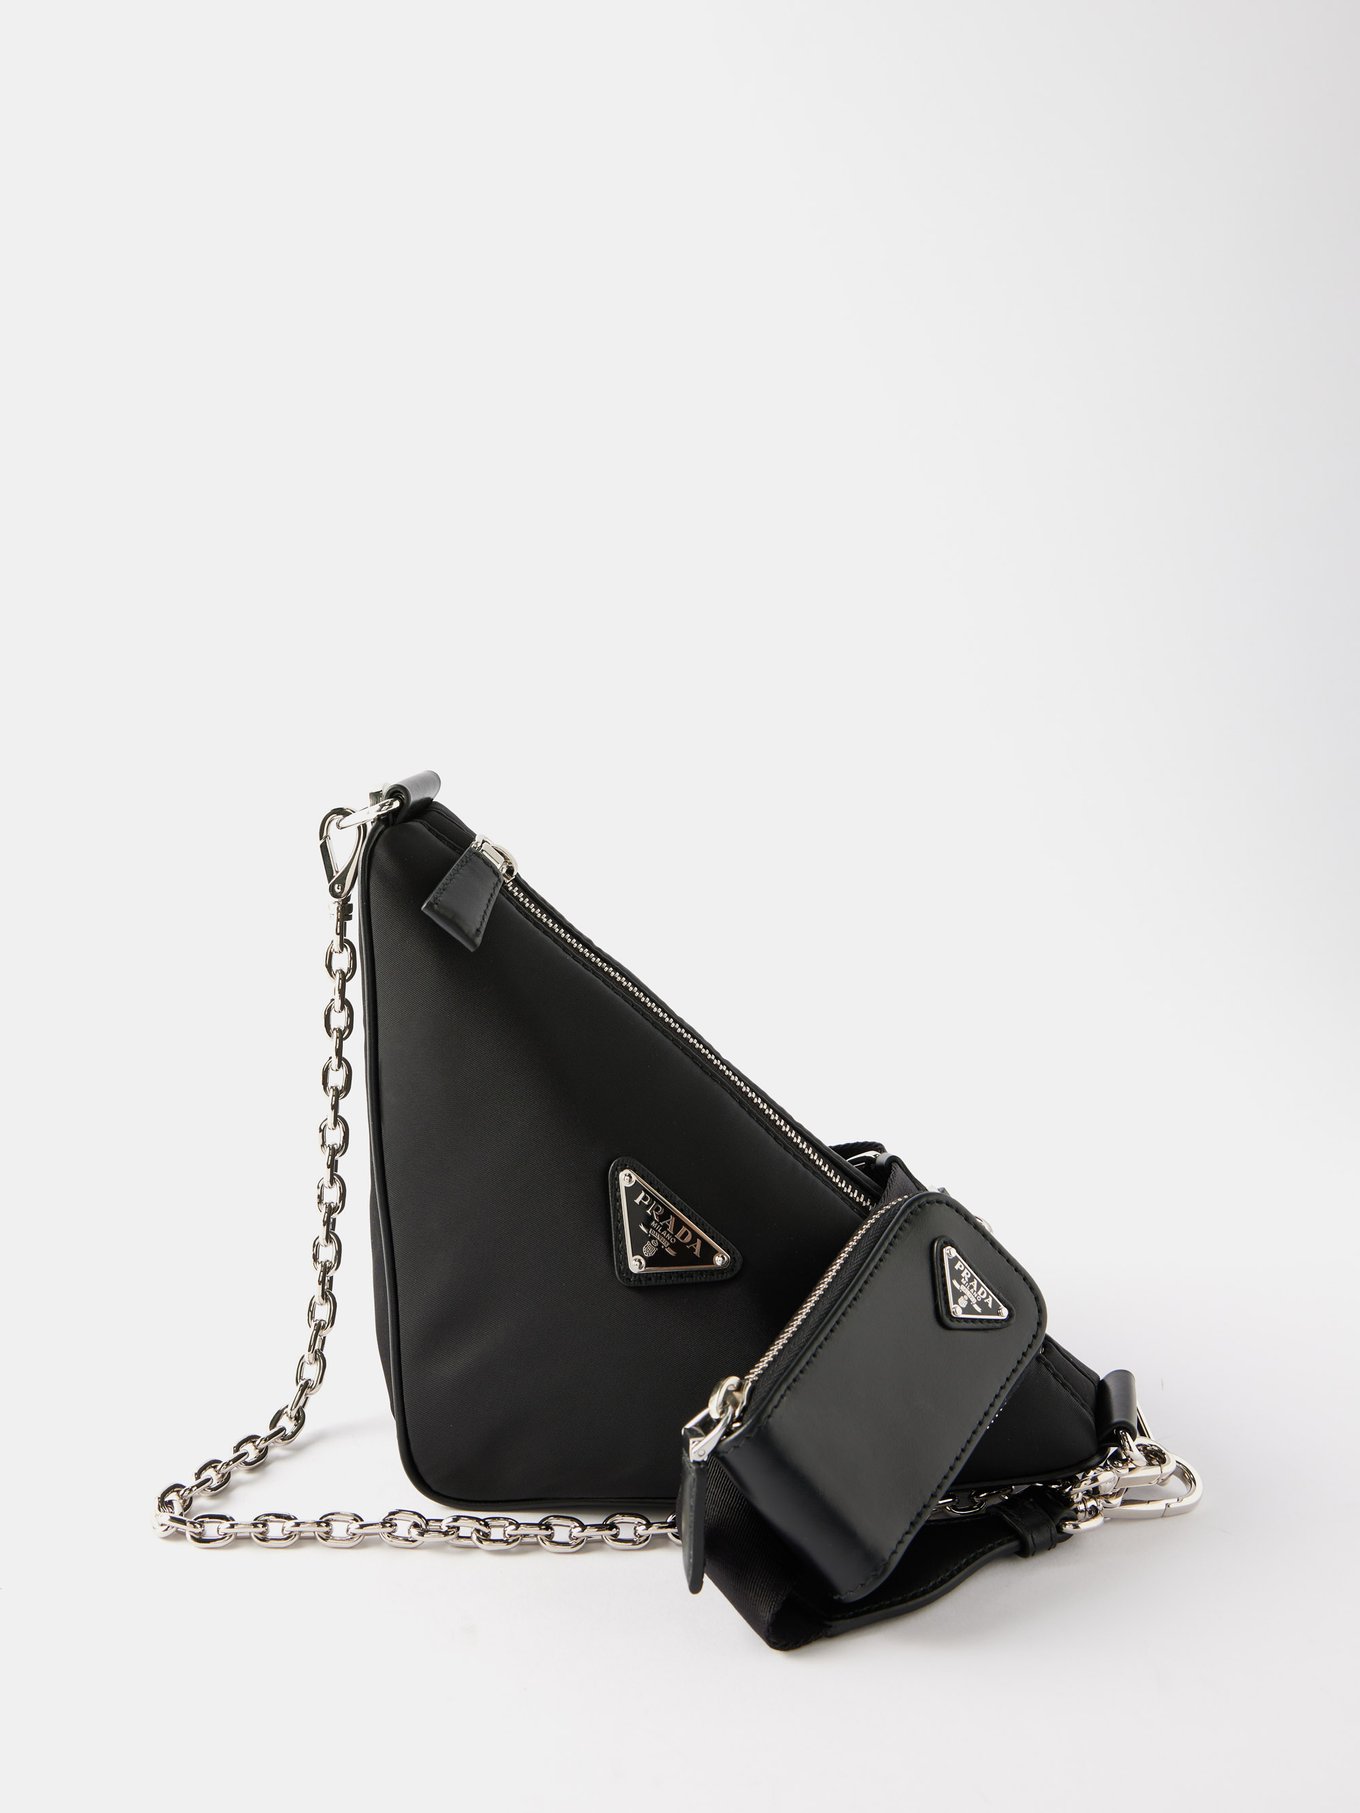 Prada Triangle-Logo On-Chain Clutch Bag Black in Nylon with Silver